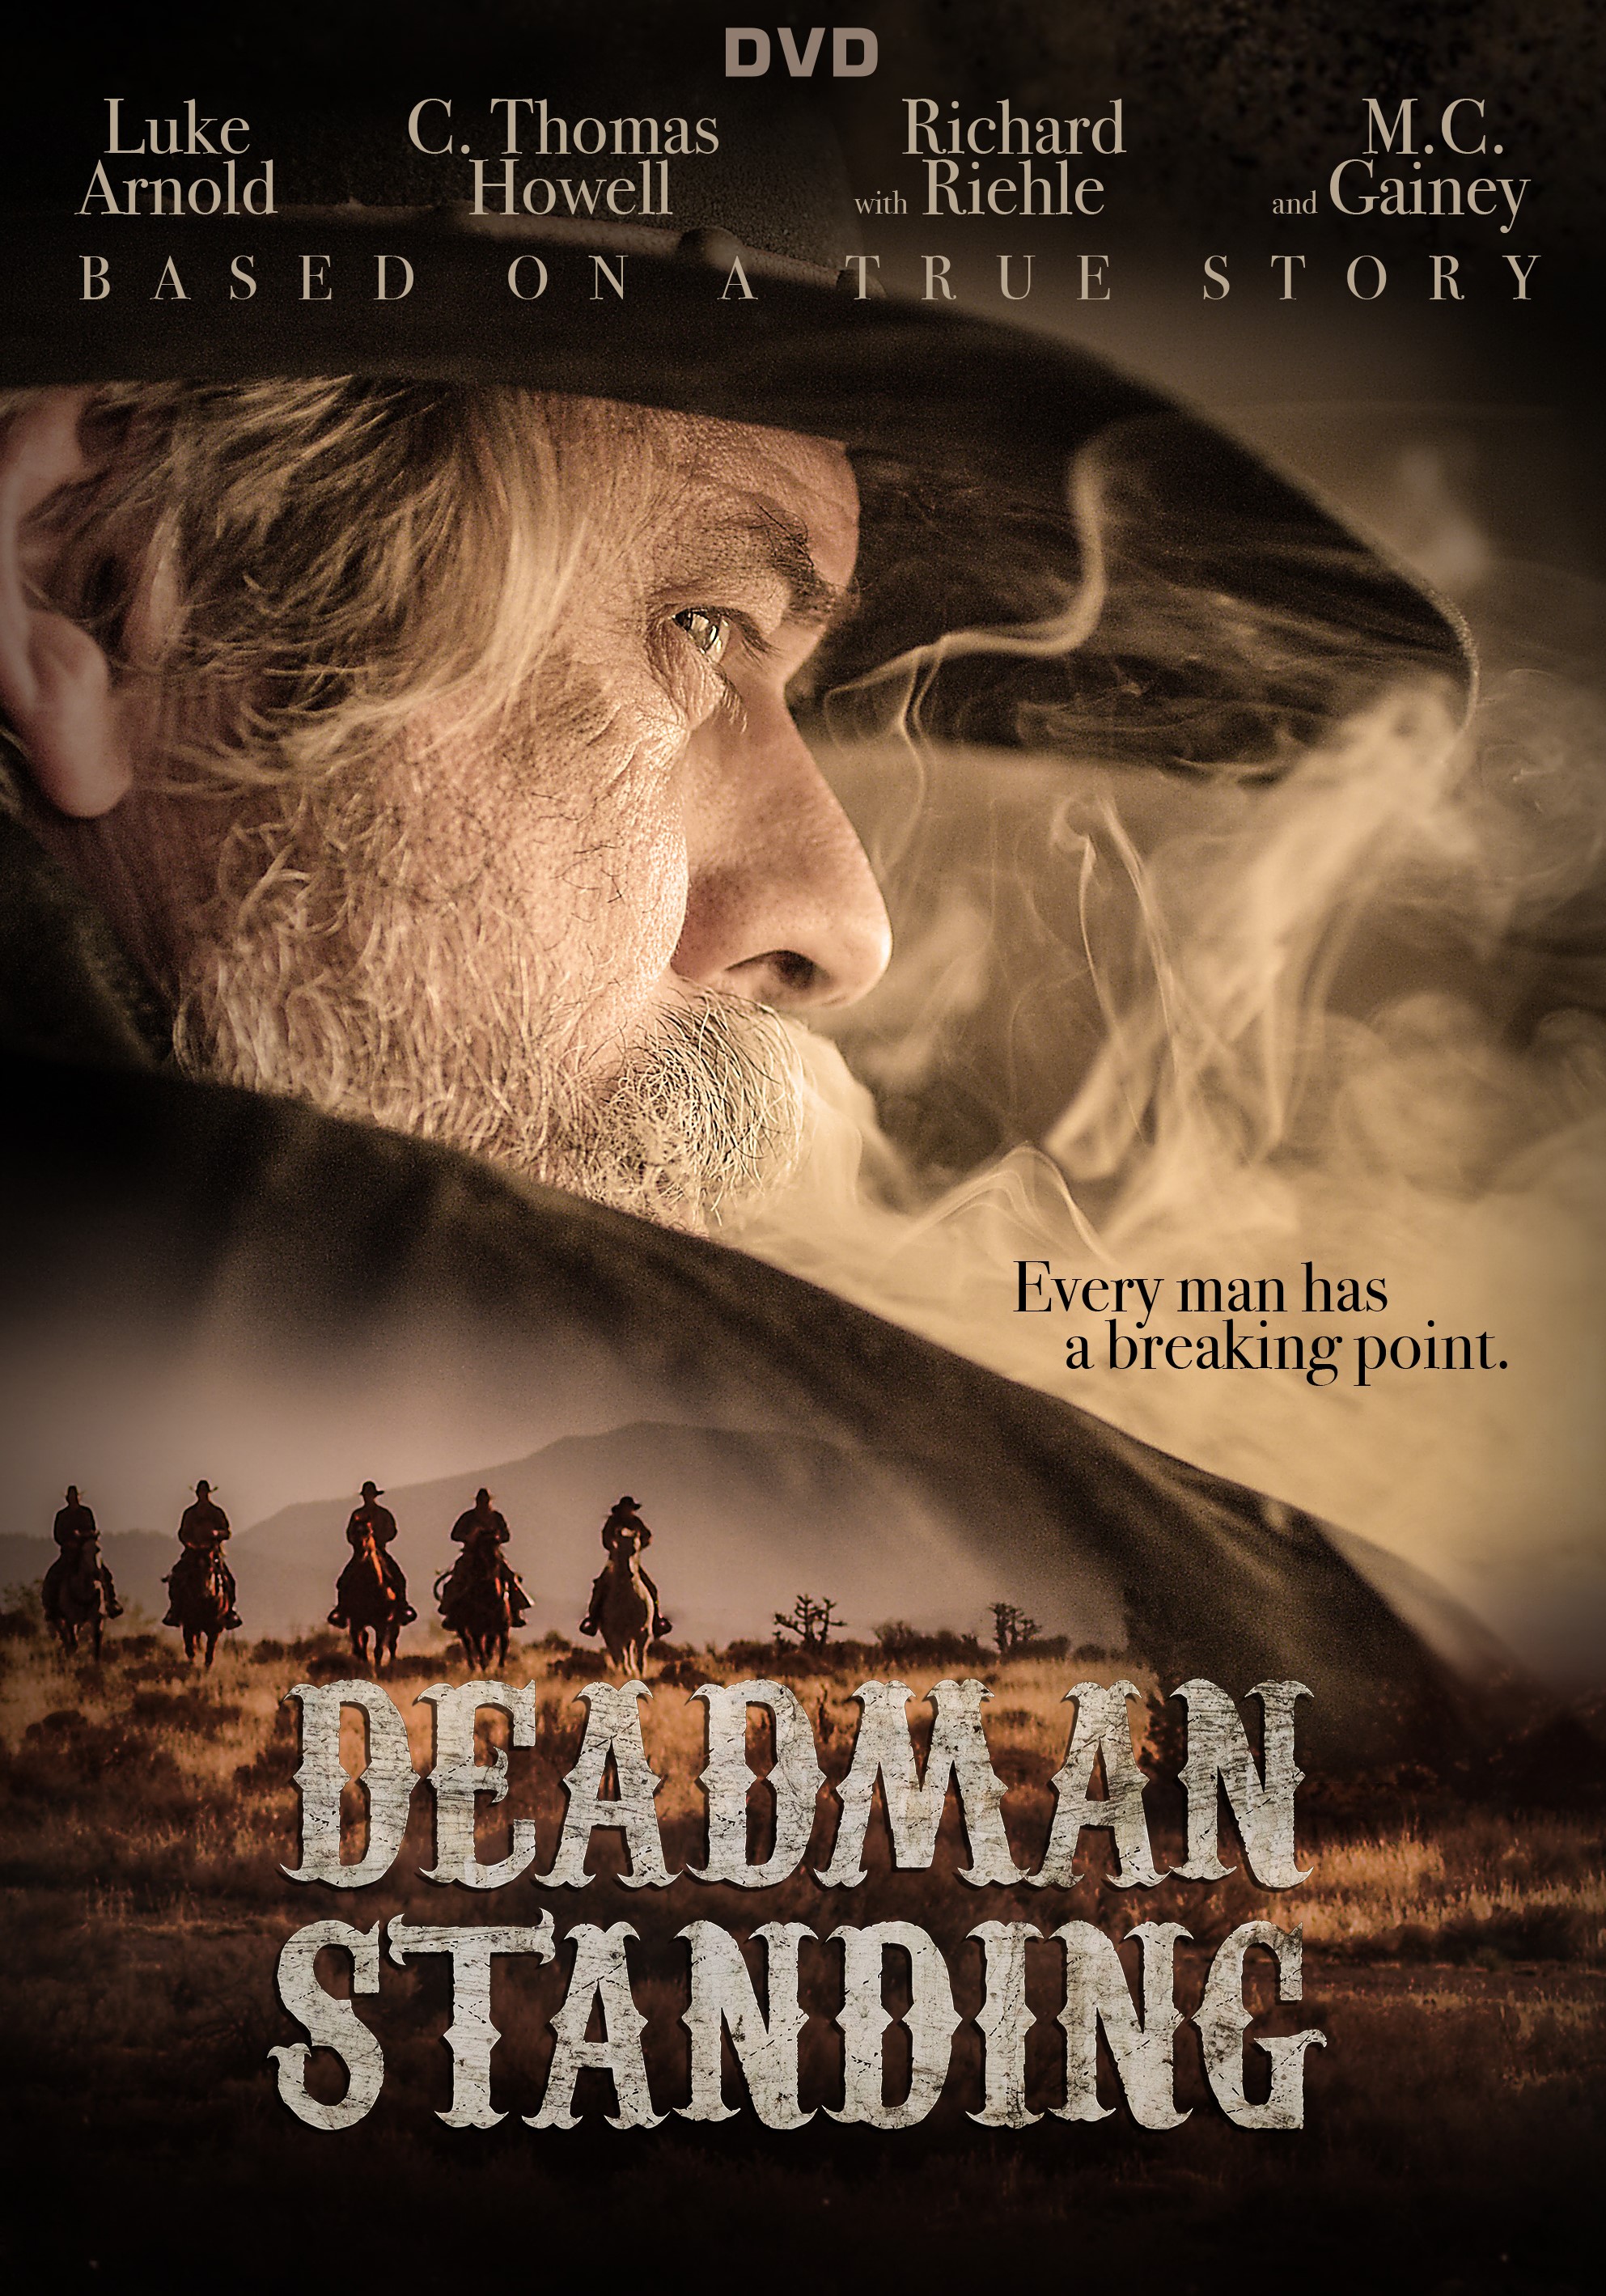 Nonton film Deadman Standing layarkaca21 indoxx1 ganool online streaming terbaru